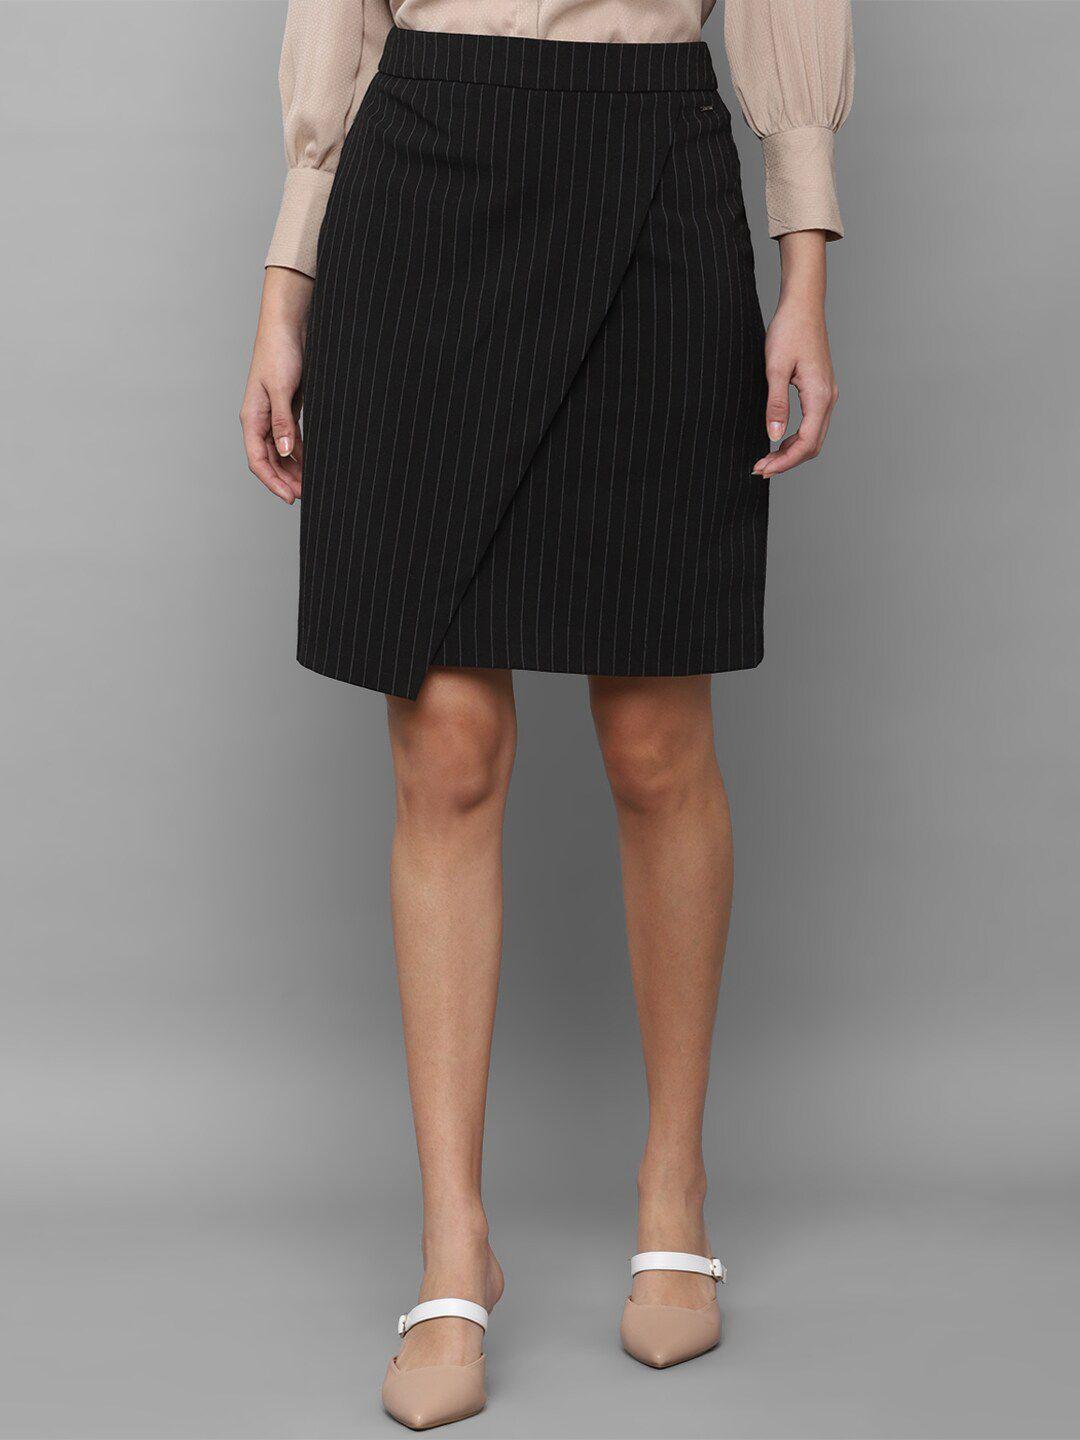 allen solly woman women black striped straight knee-length skirt